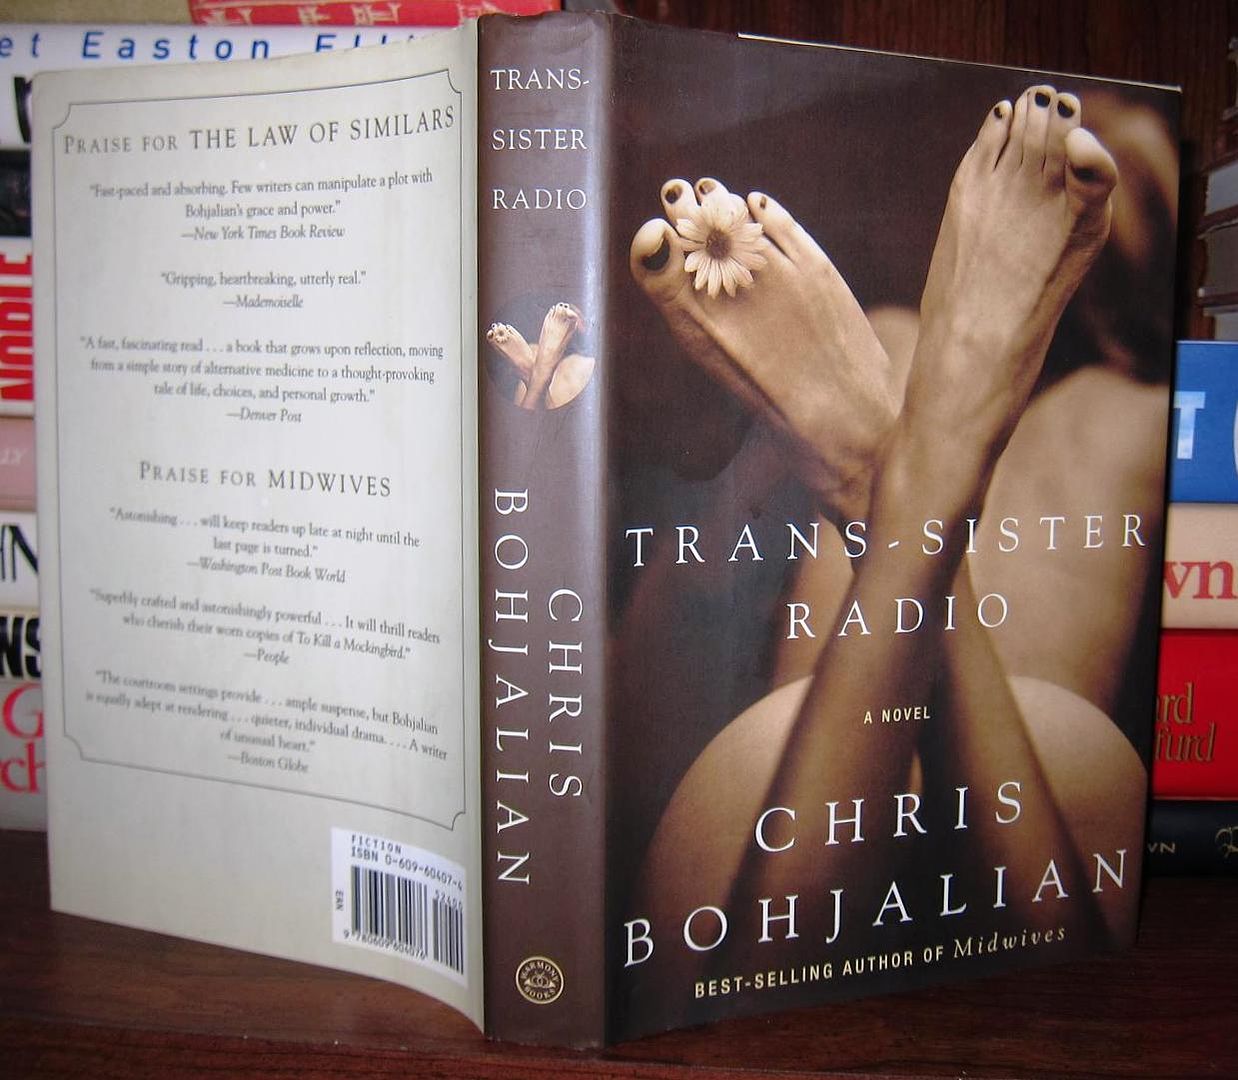 CHRIS BOHJALIAN - Trans-Sister Radio